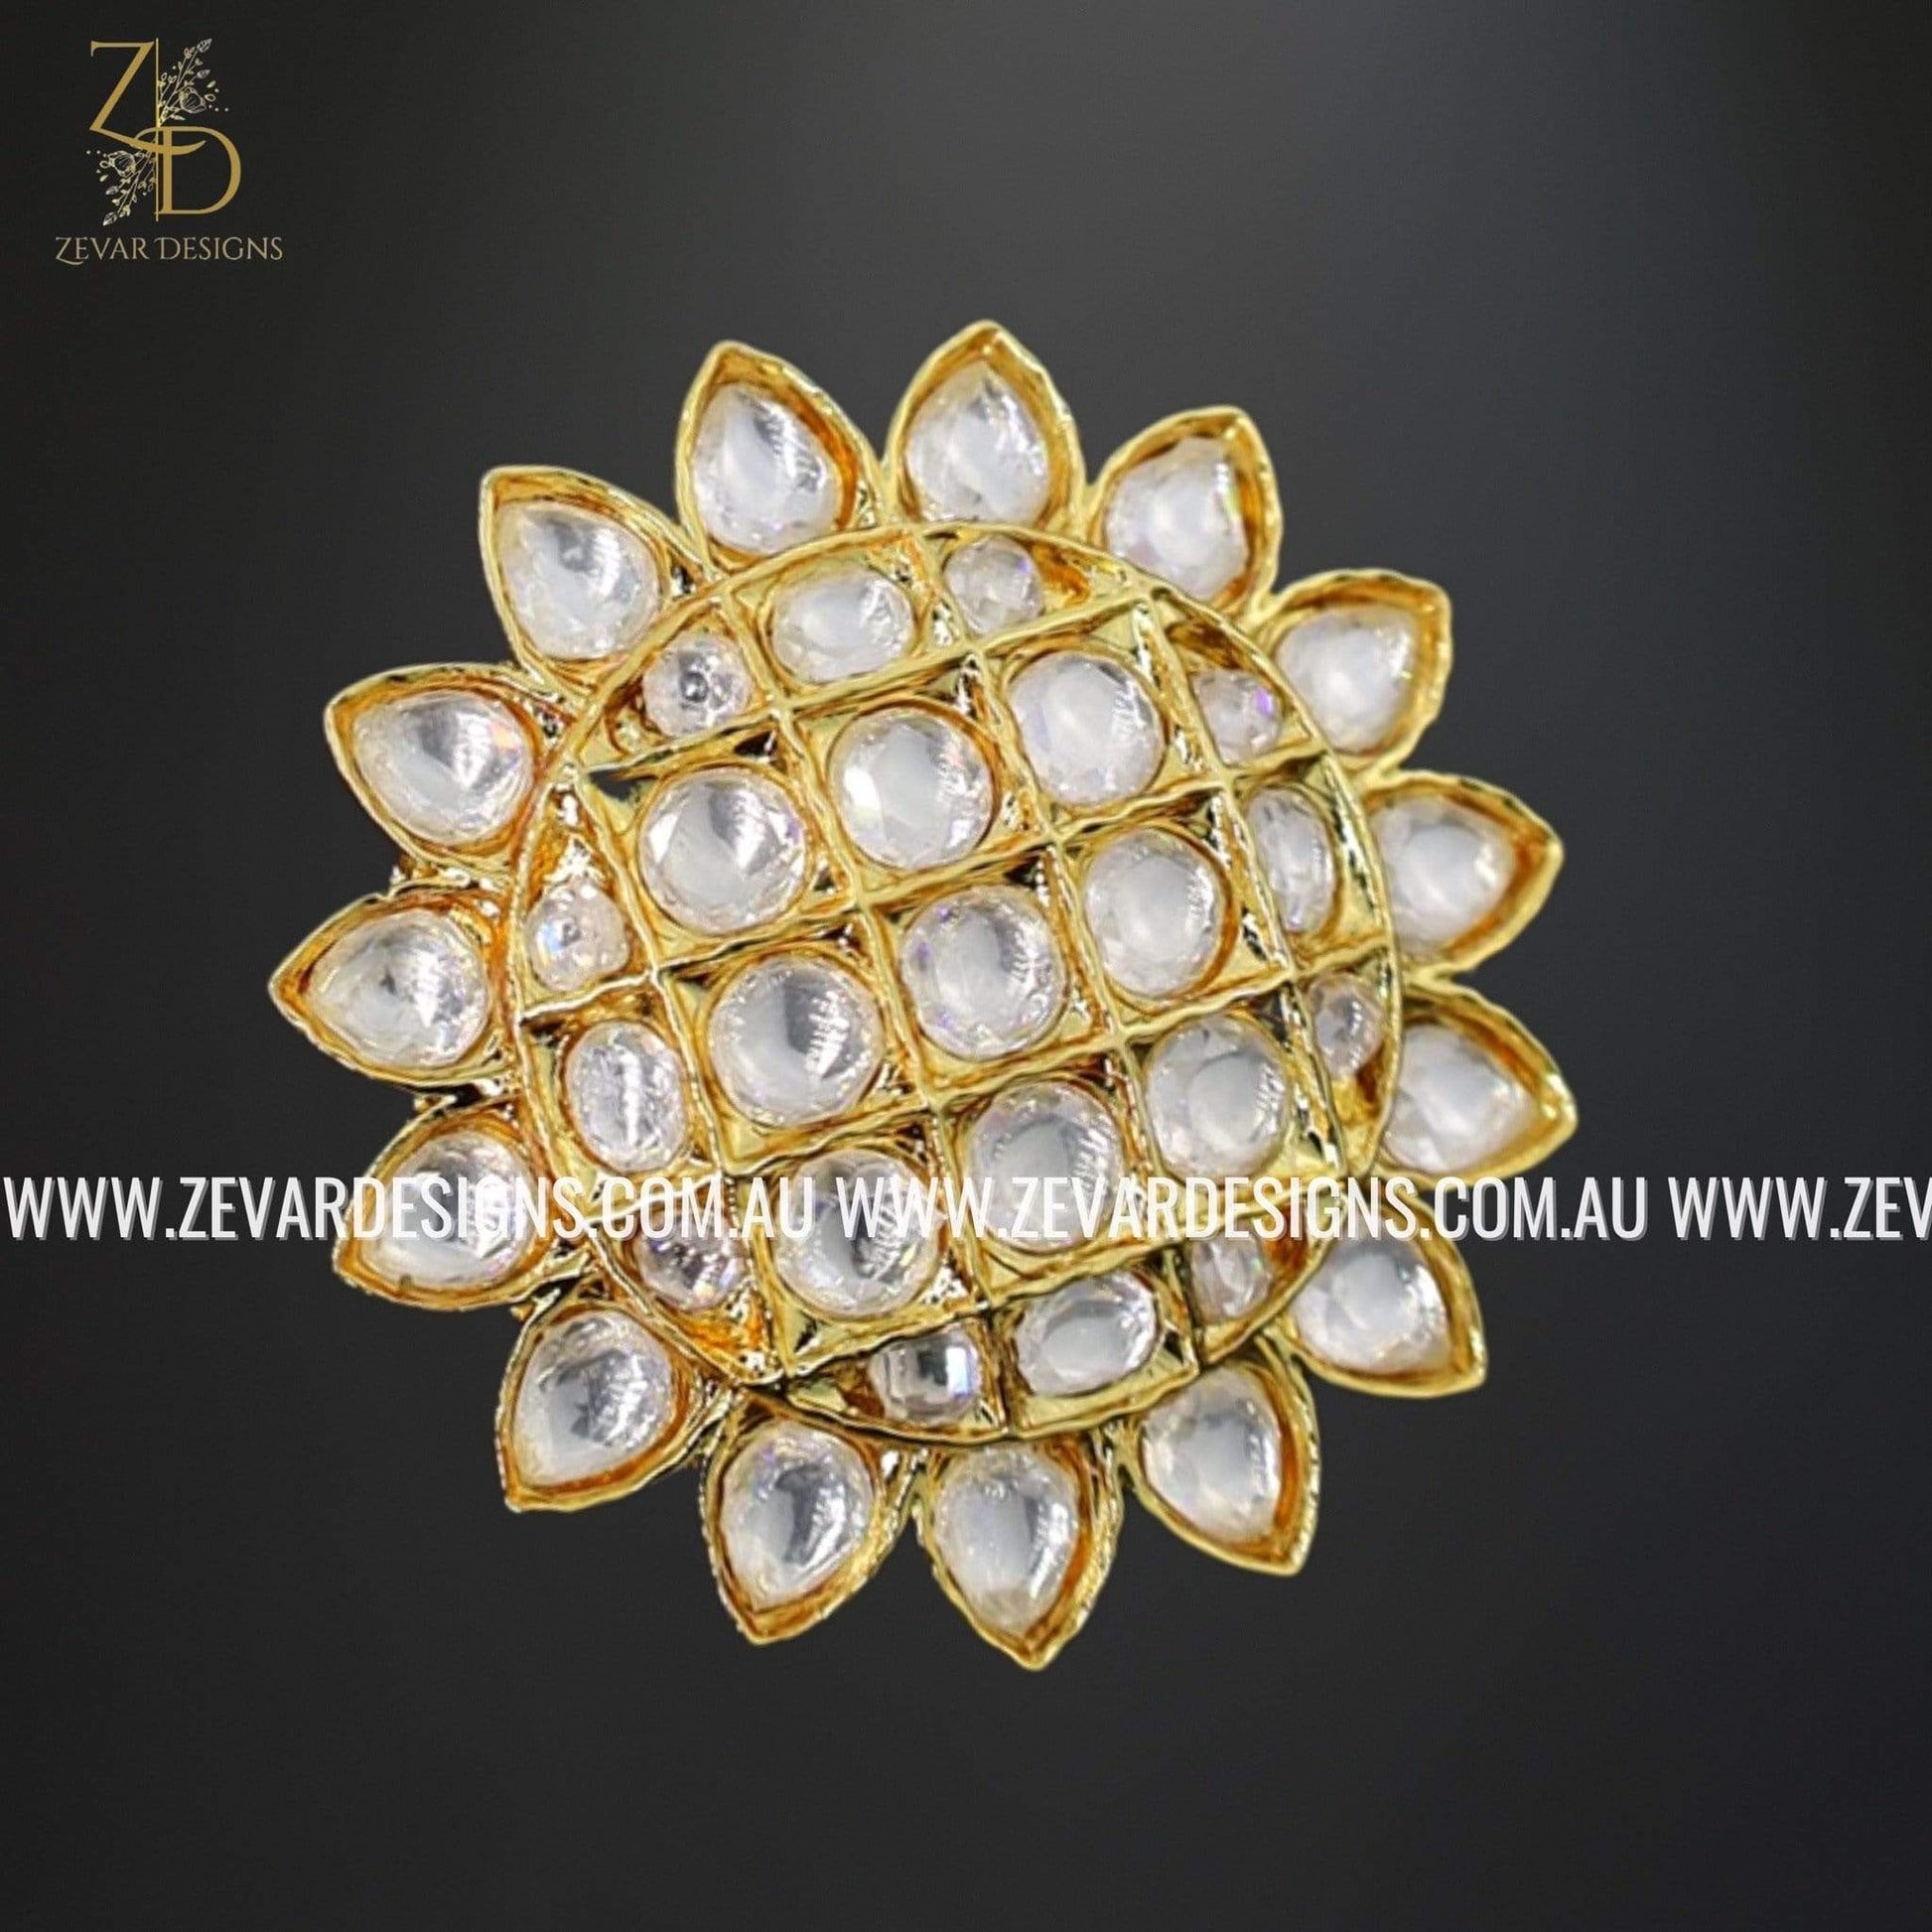 Zevar Designs - Online Store for Indian Kundan and Fashion Jewellery Australia Kundan Ring Designer Kundan Ring